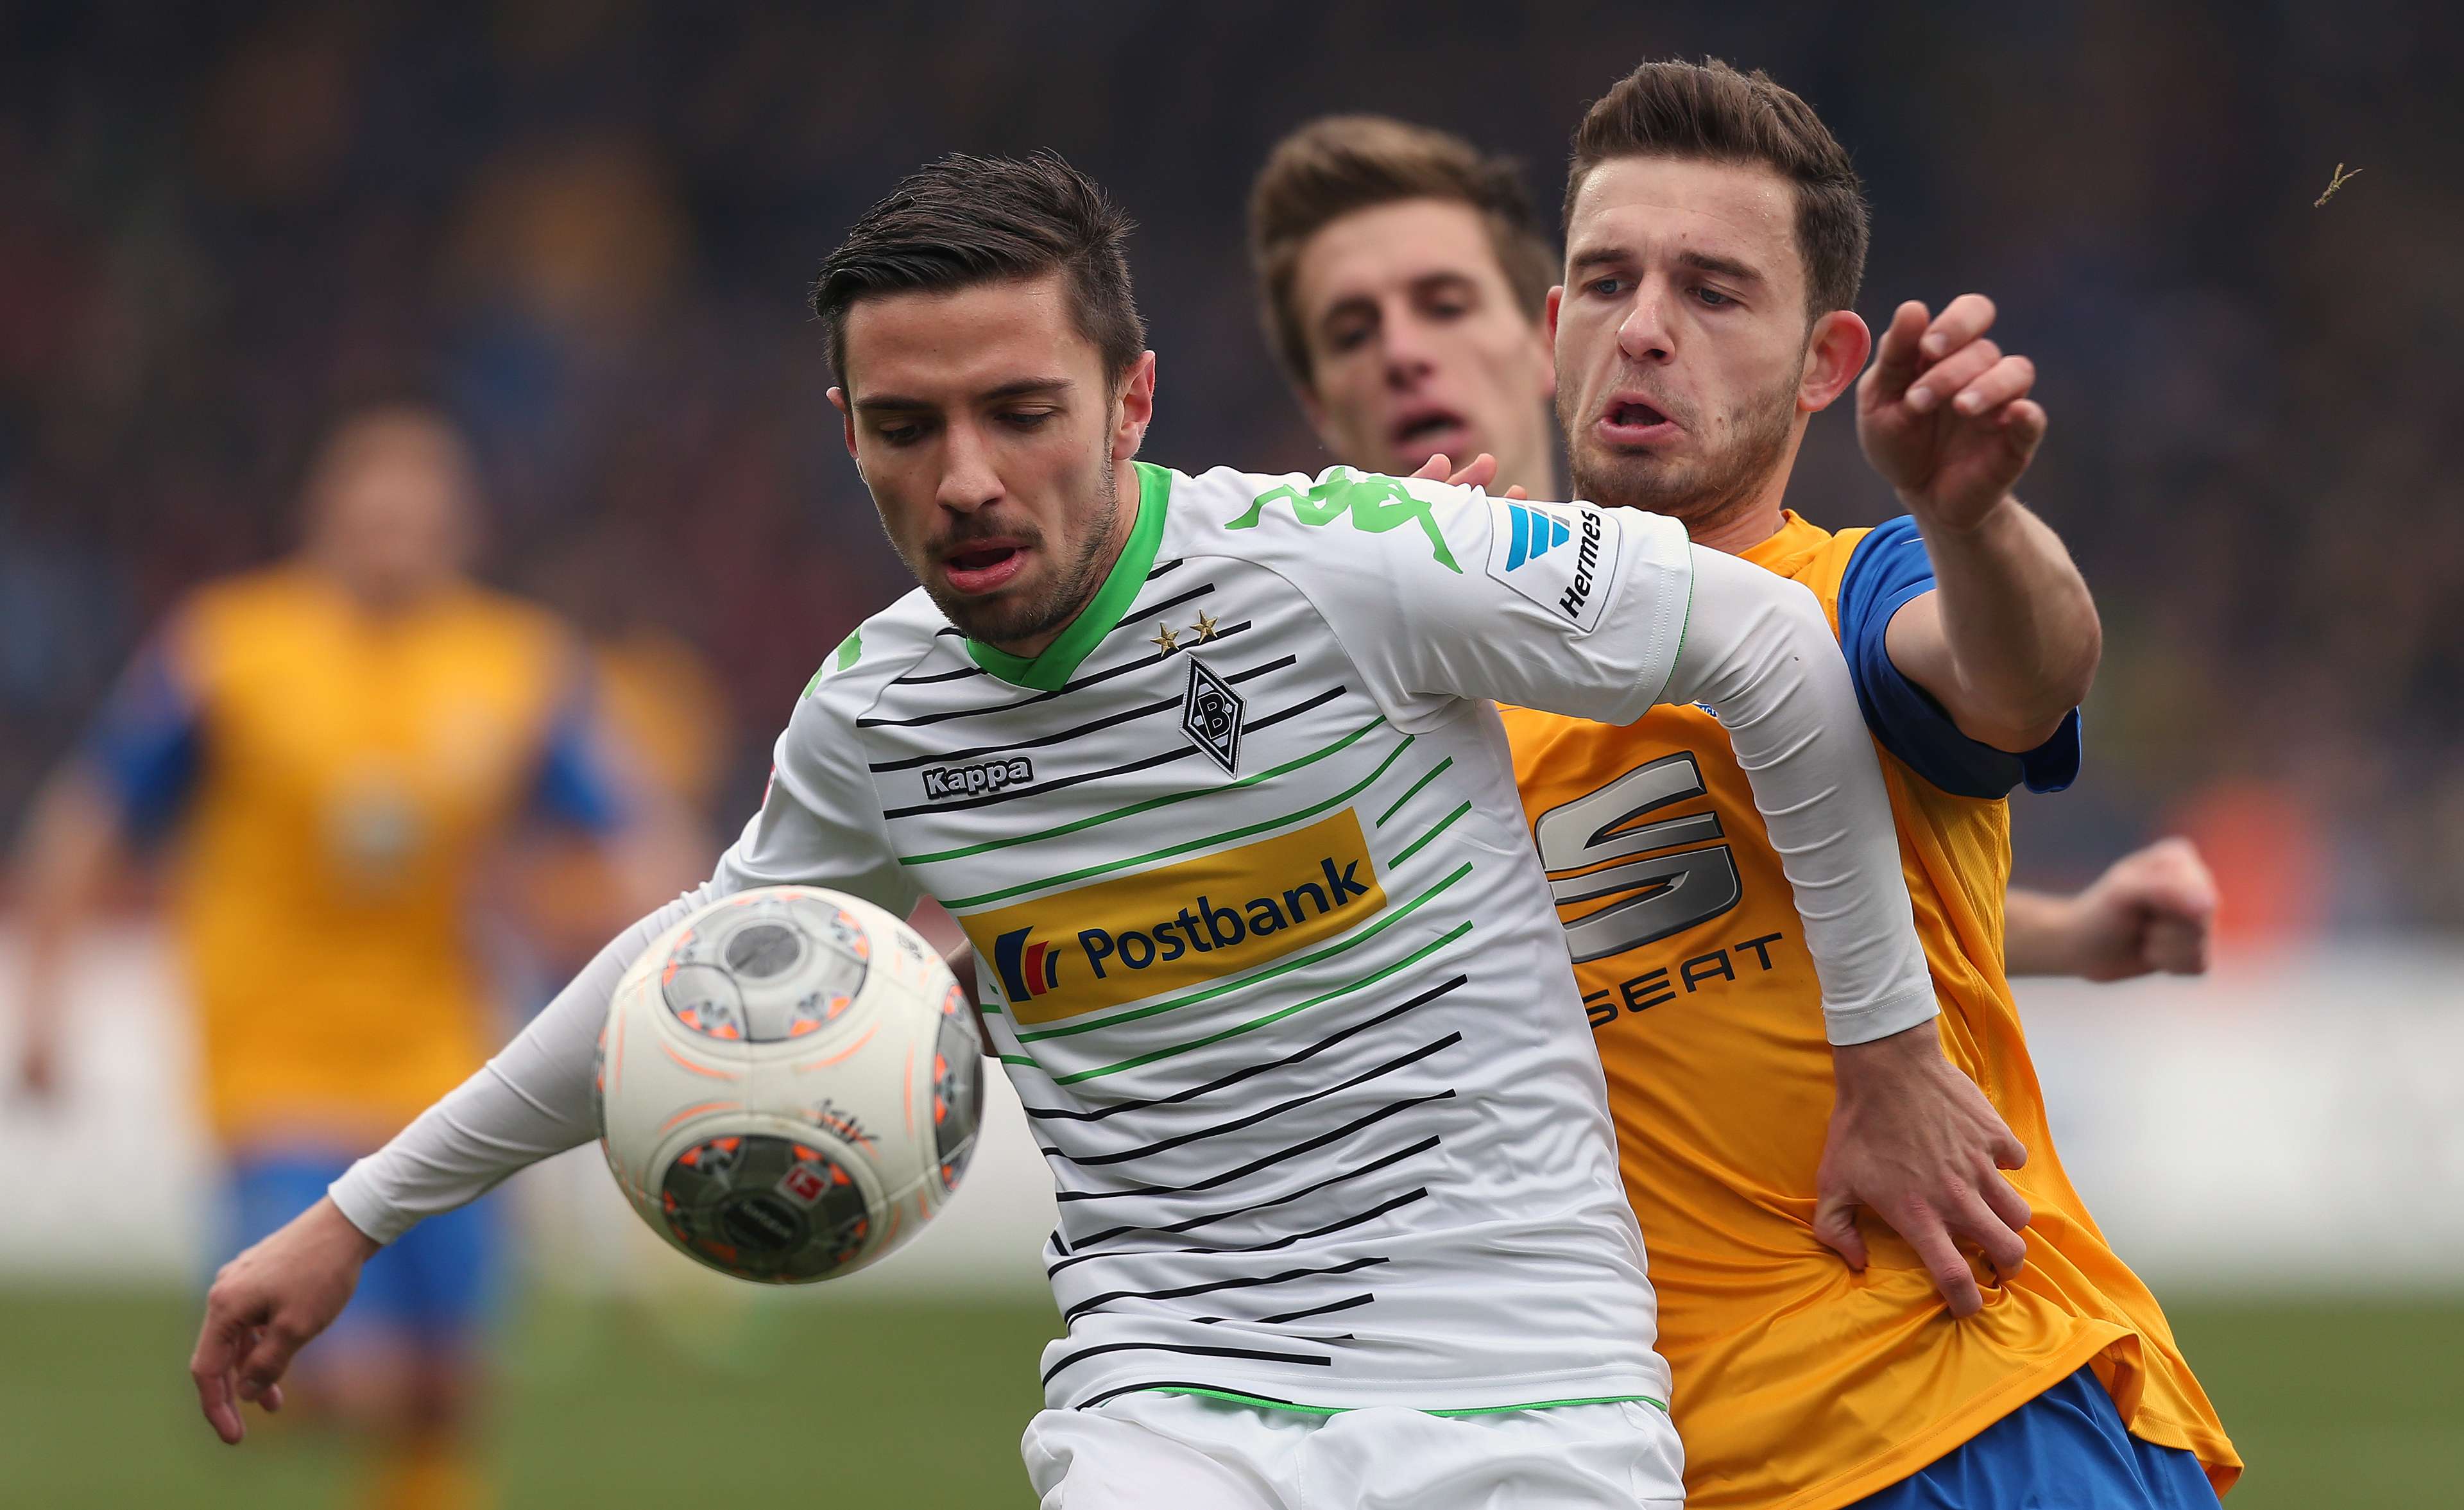 Borussia Monchengladbach full-back Julian Korb